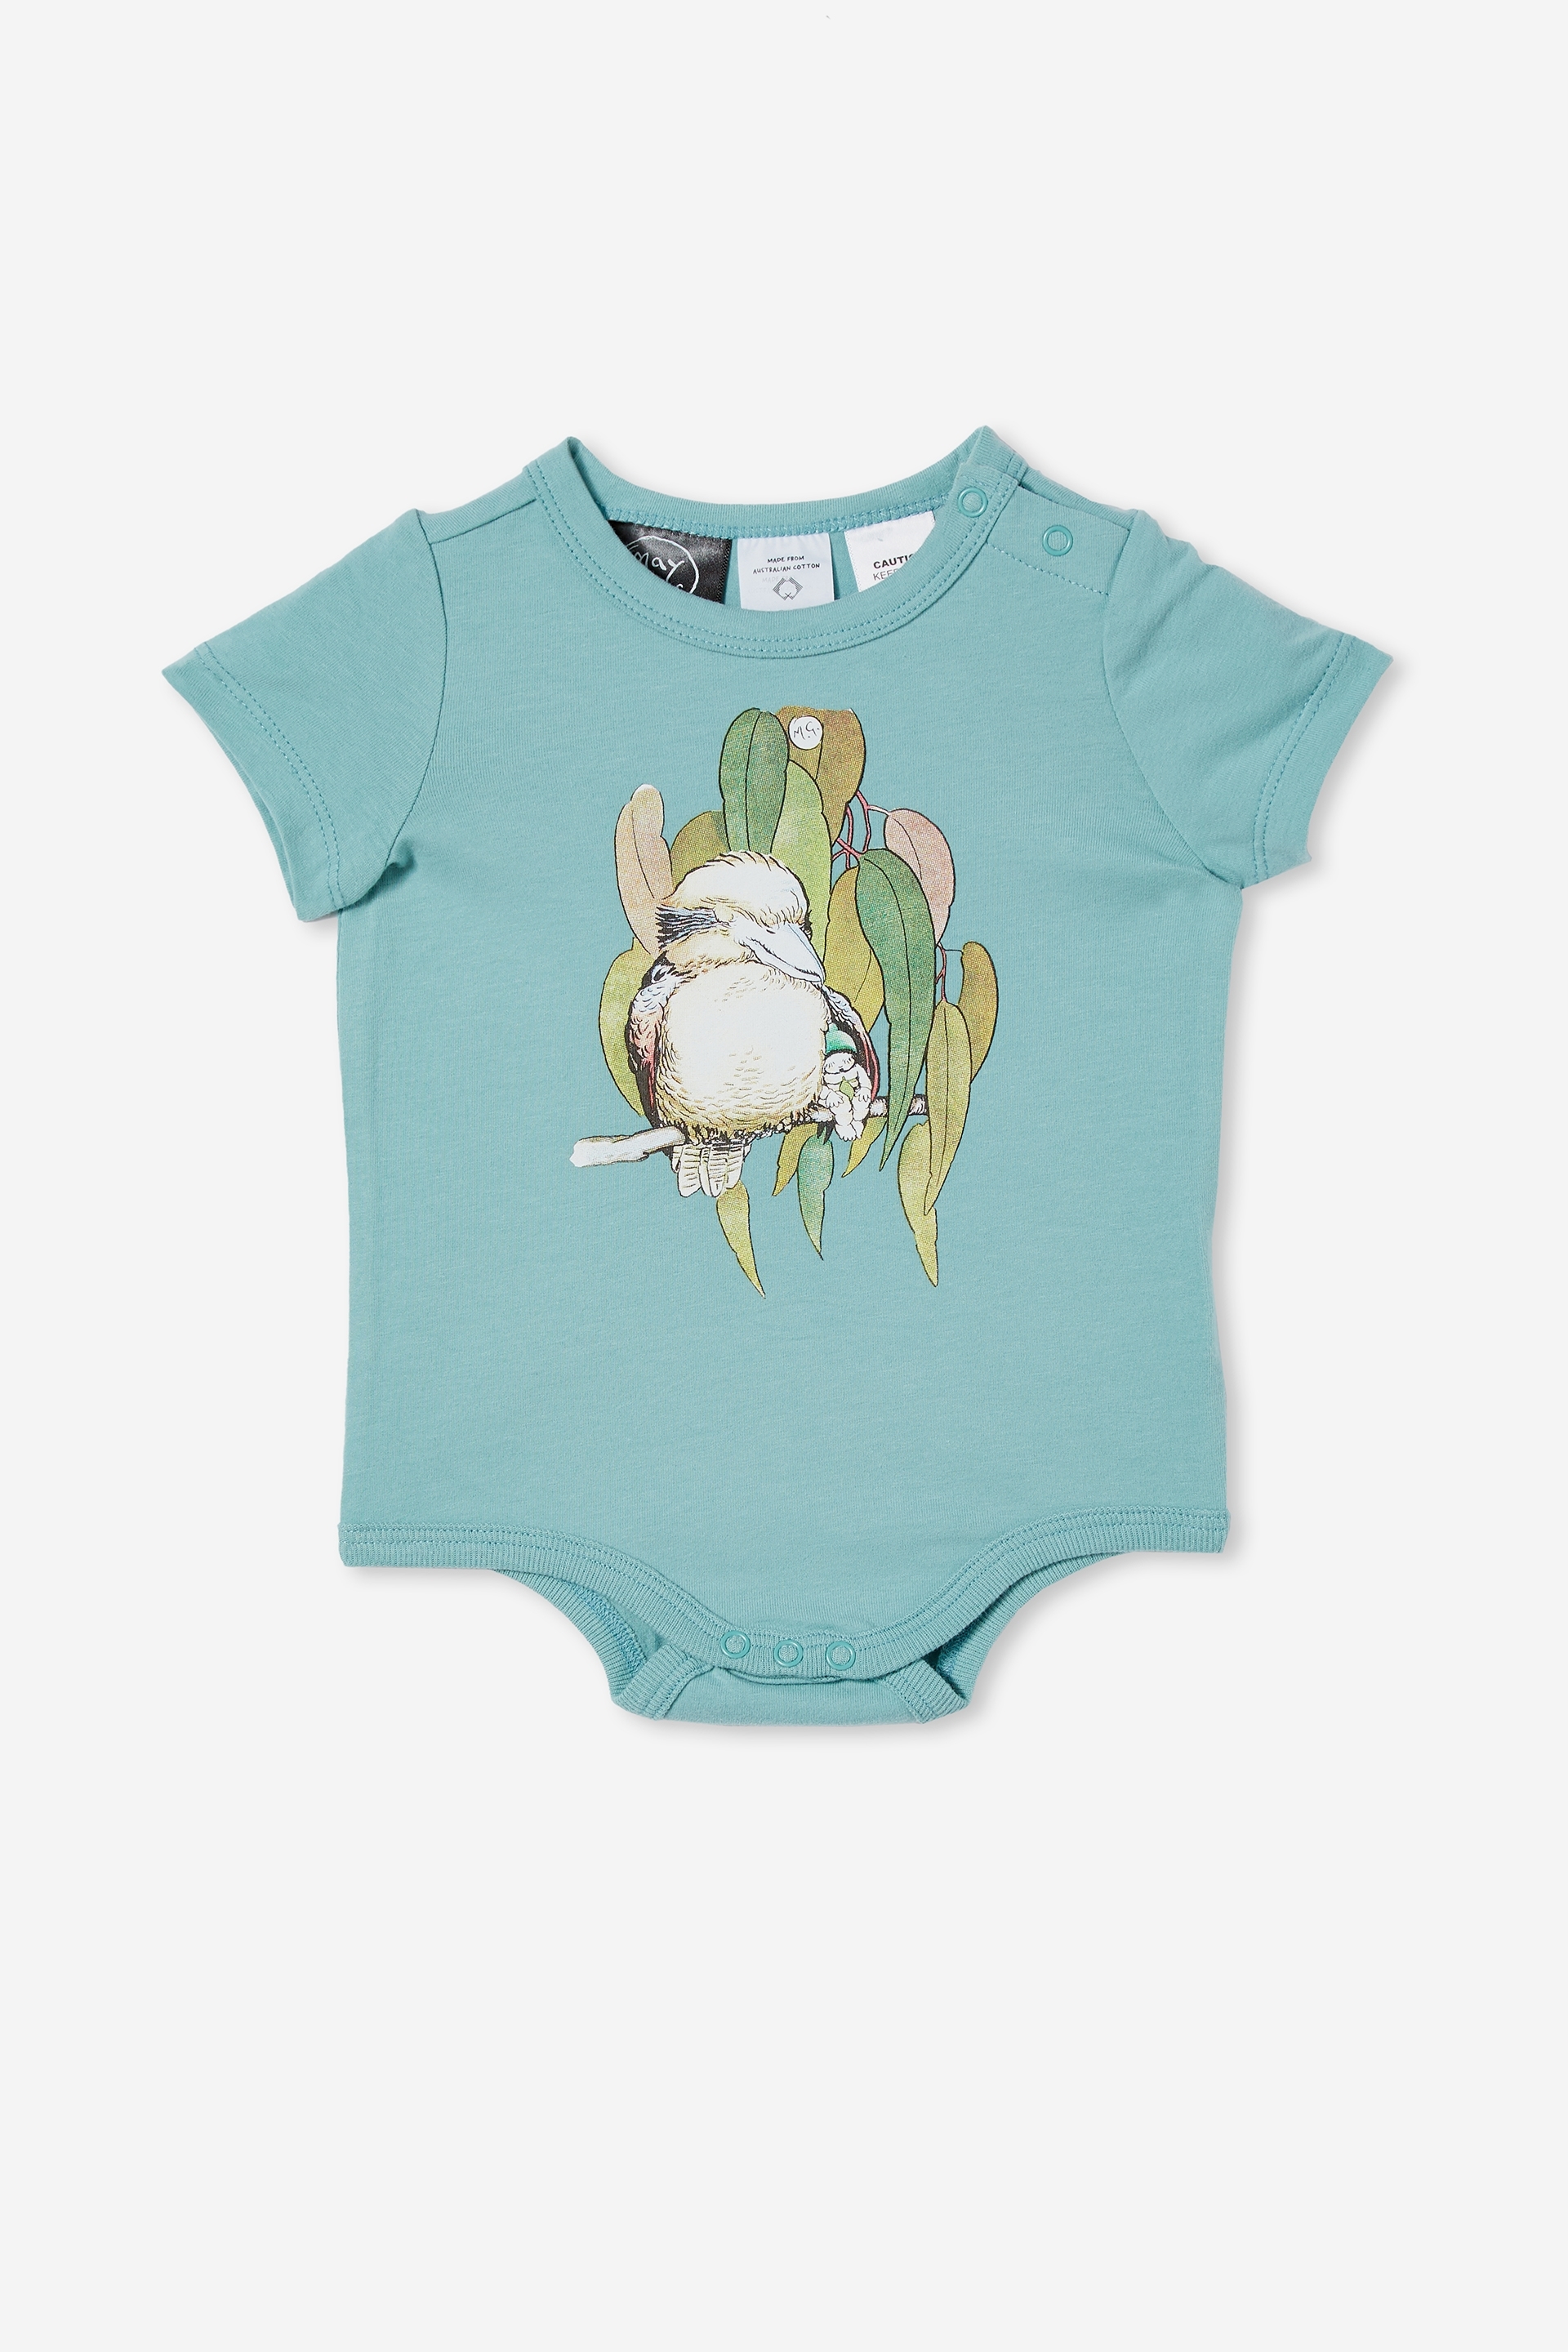 Cotton On Kids - The Short Sleeve Bubbysuit Lcn - Lcn may rusty aqua/kookaburra